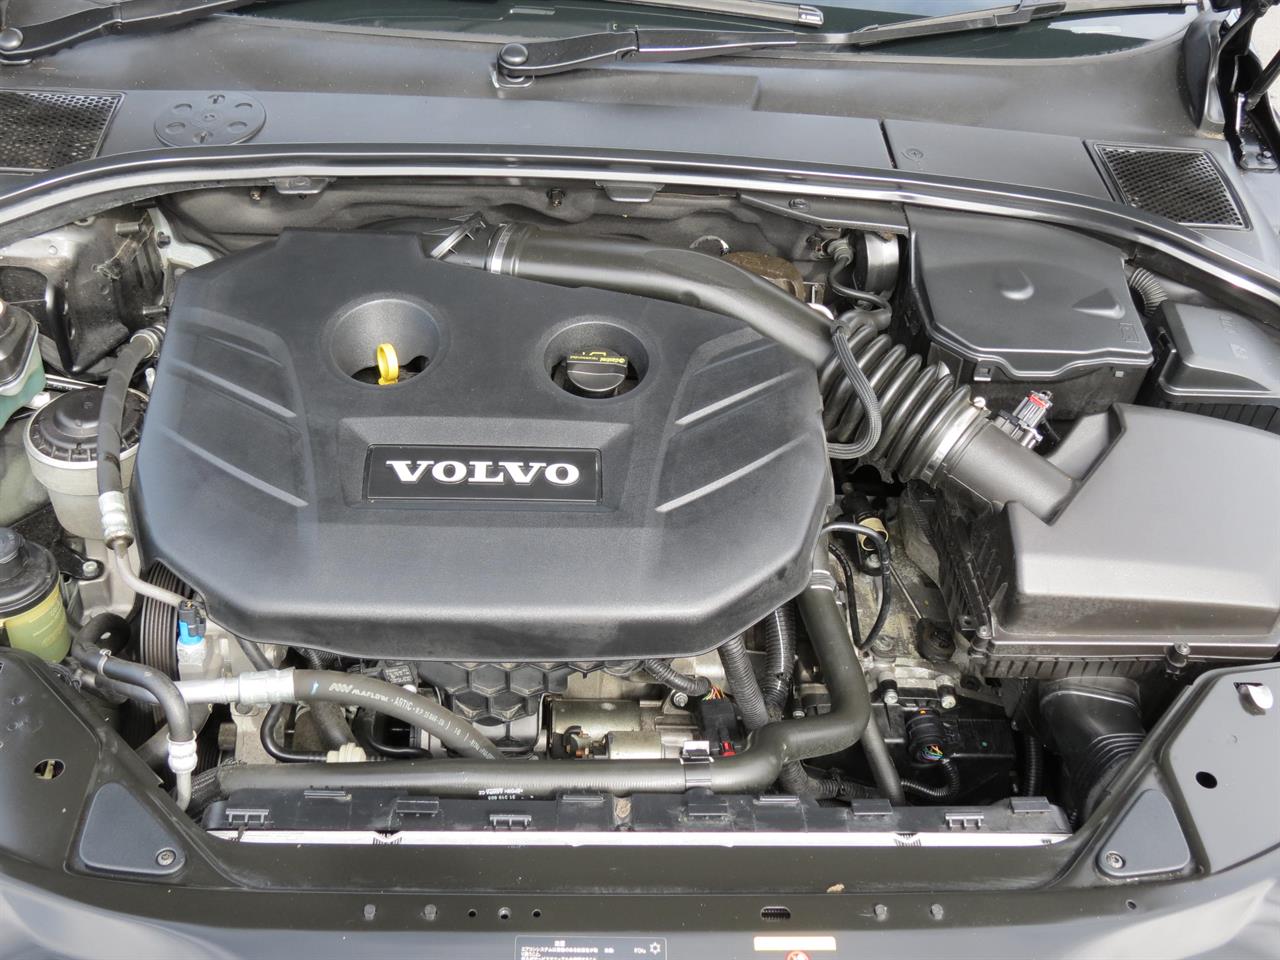 2012 Volvo V70 only $48 weekly